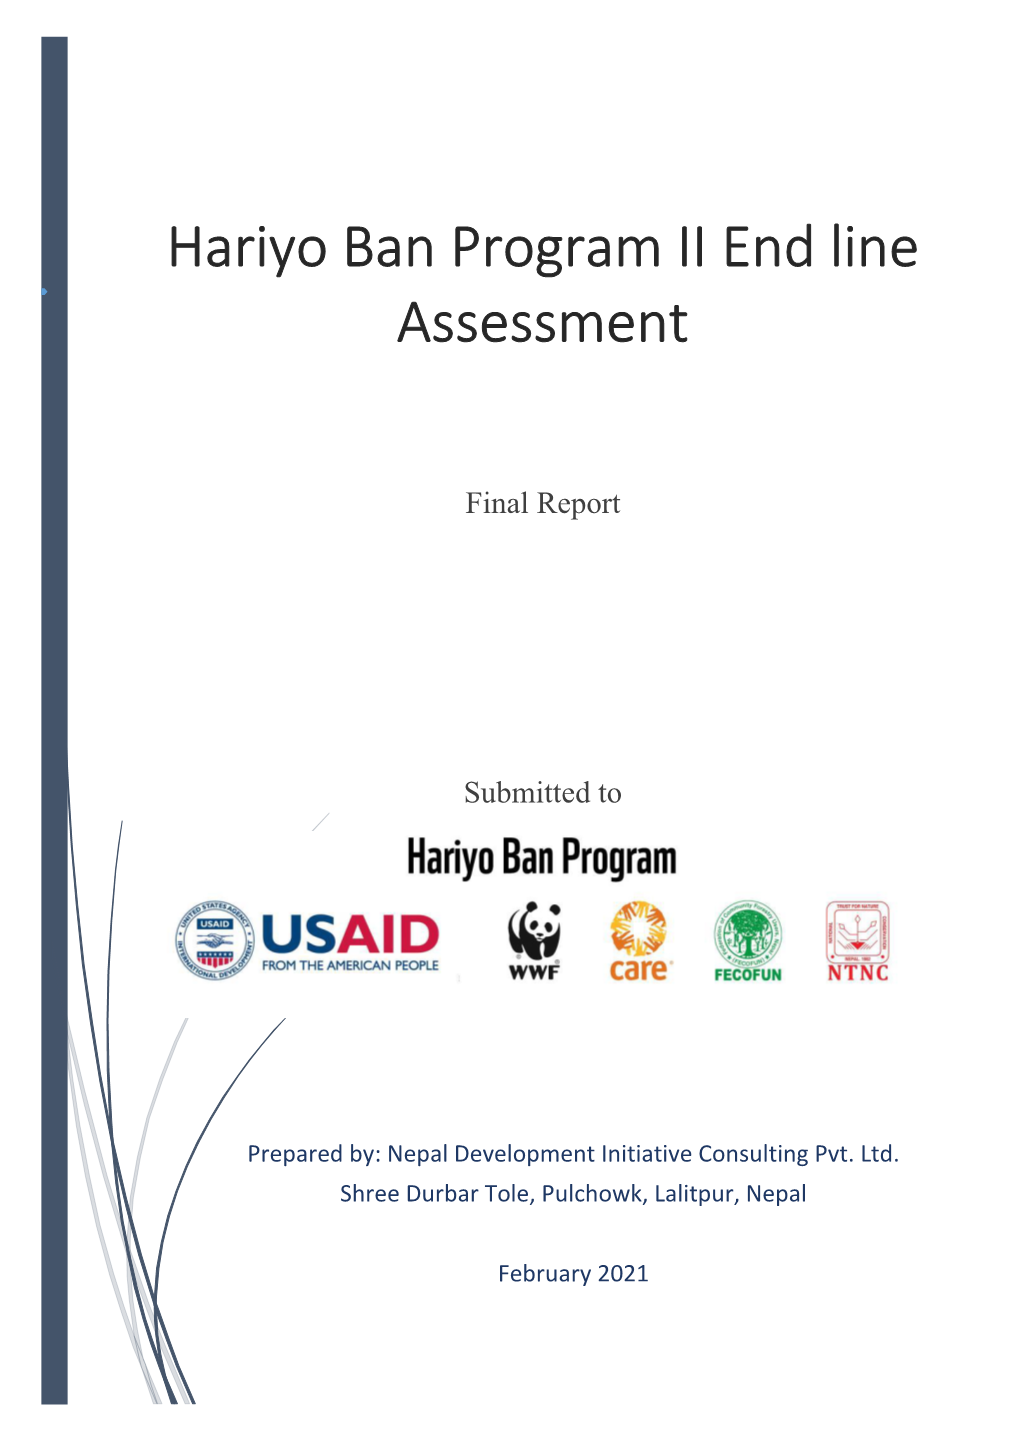 Hariyo Ban Program II End Line Assessment